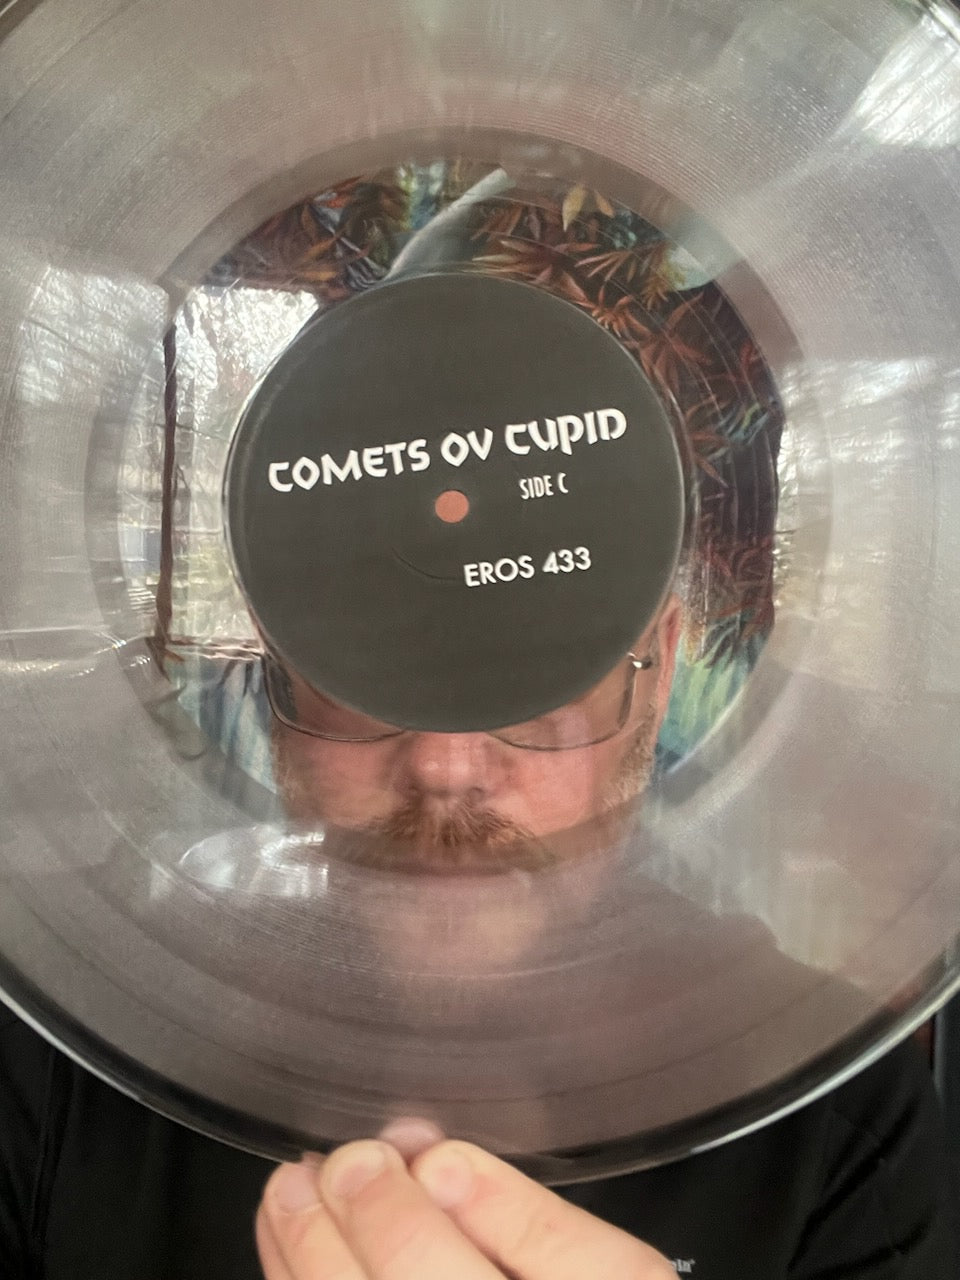 New Album Comets Ov Cupid "Eros 433"